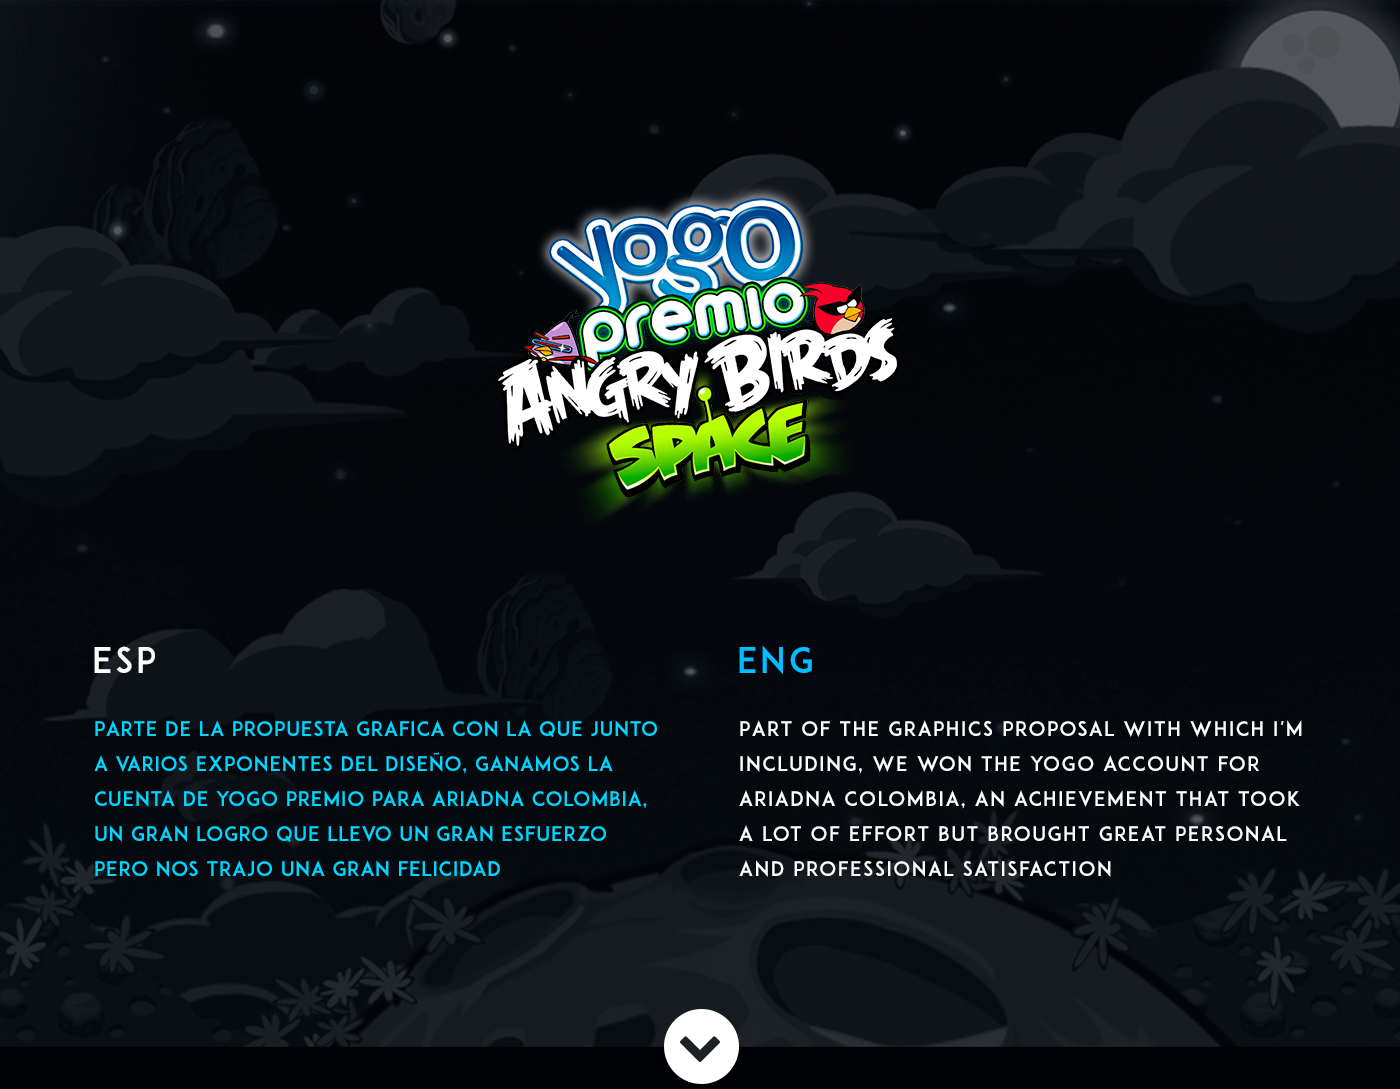 yogo premio licitación yogurt angry birds diseño interfaz Web design yogo yogo